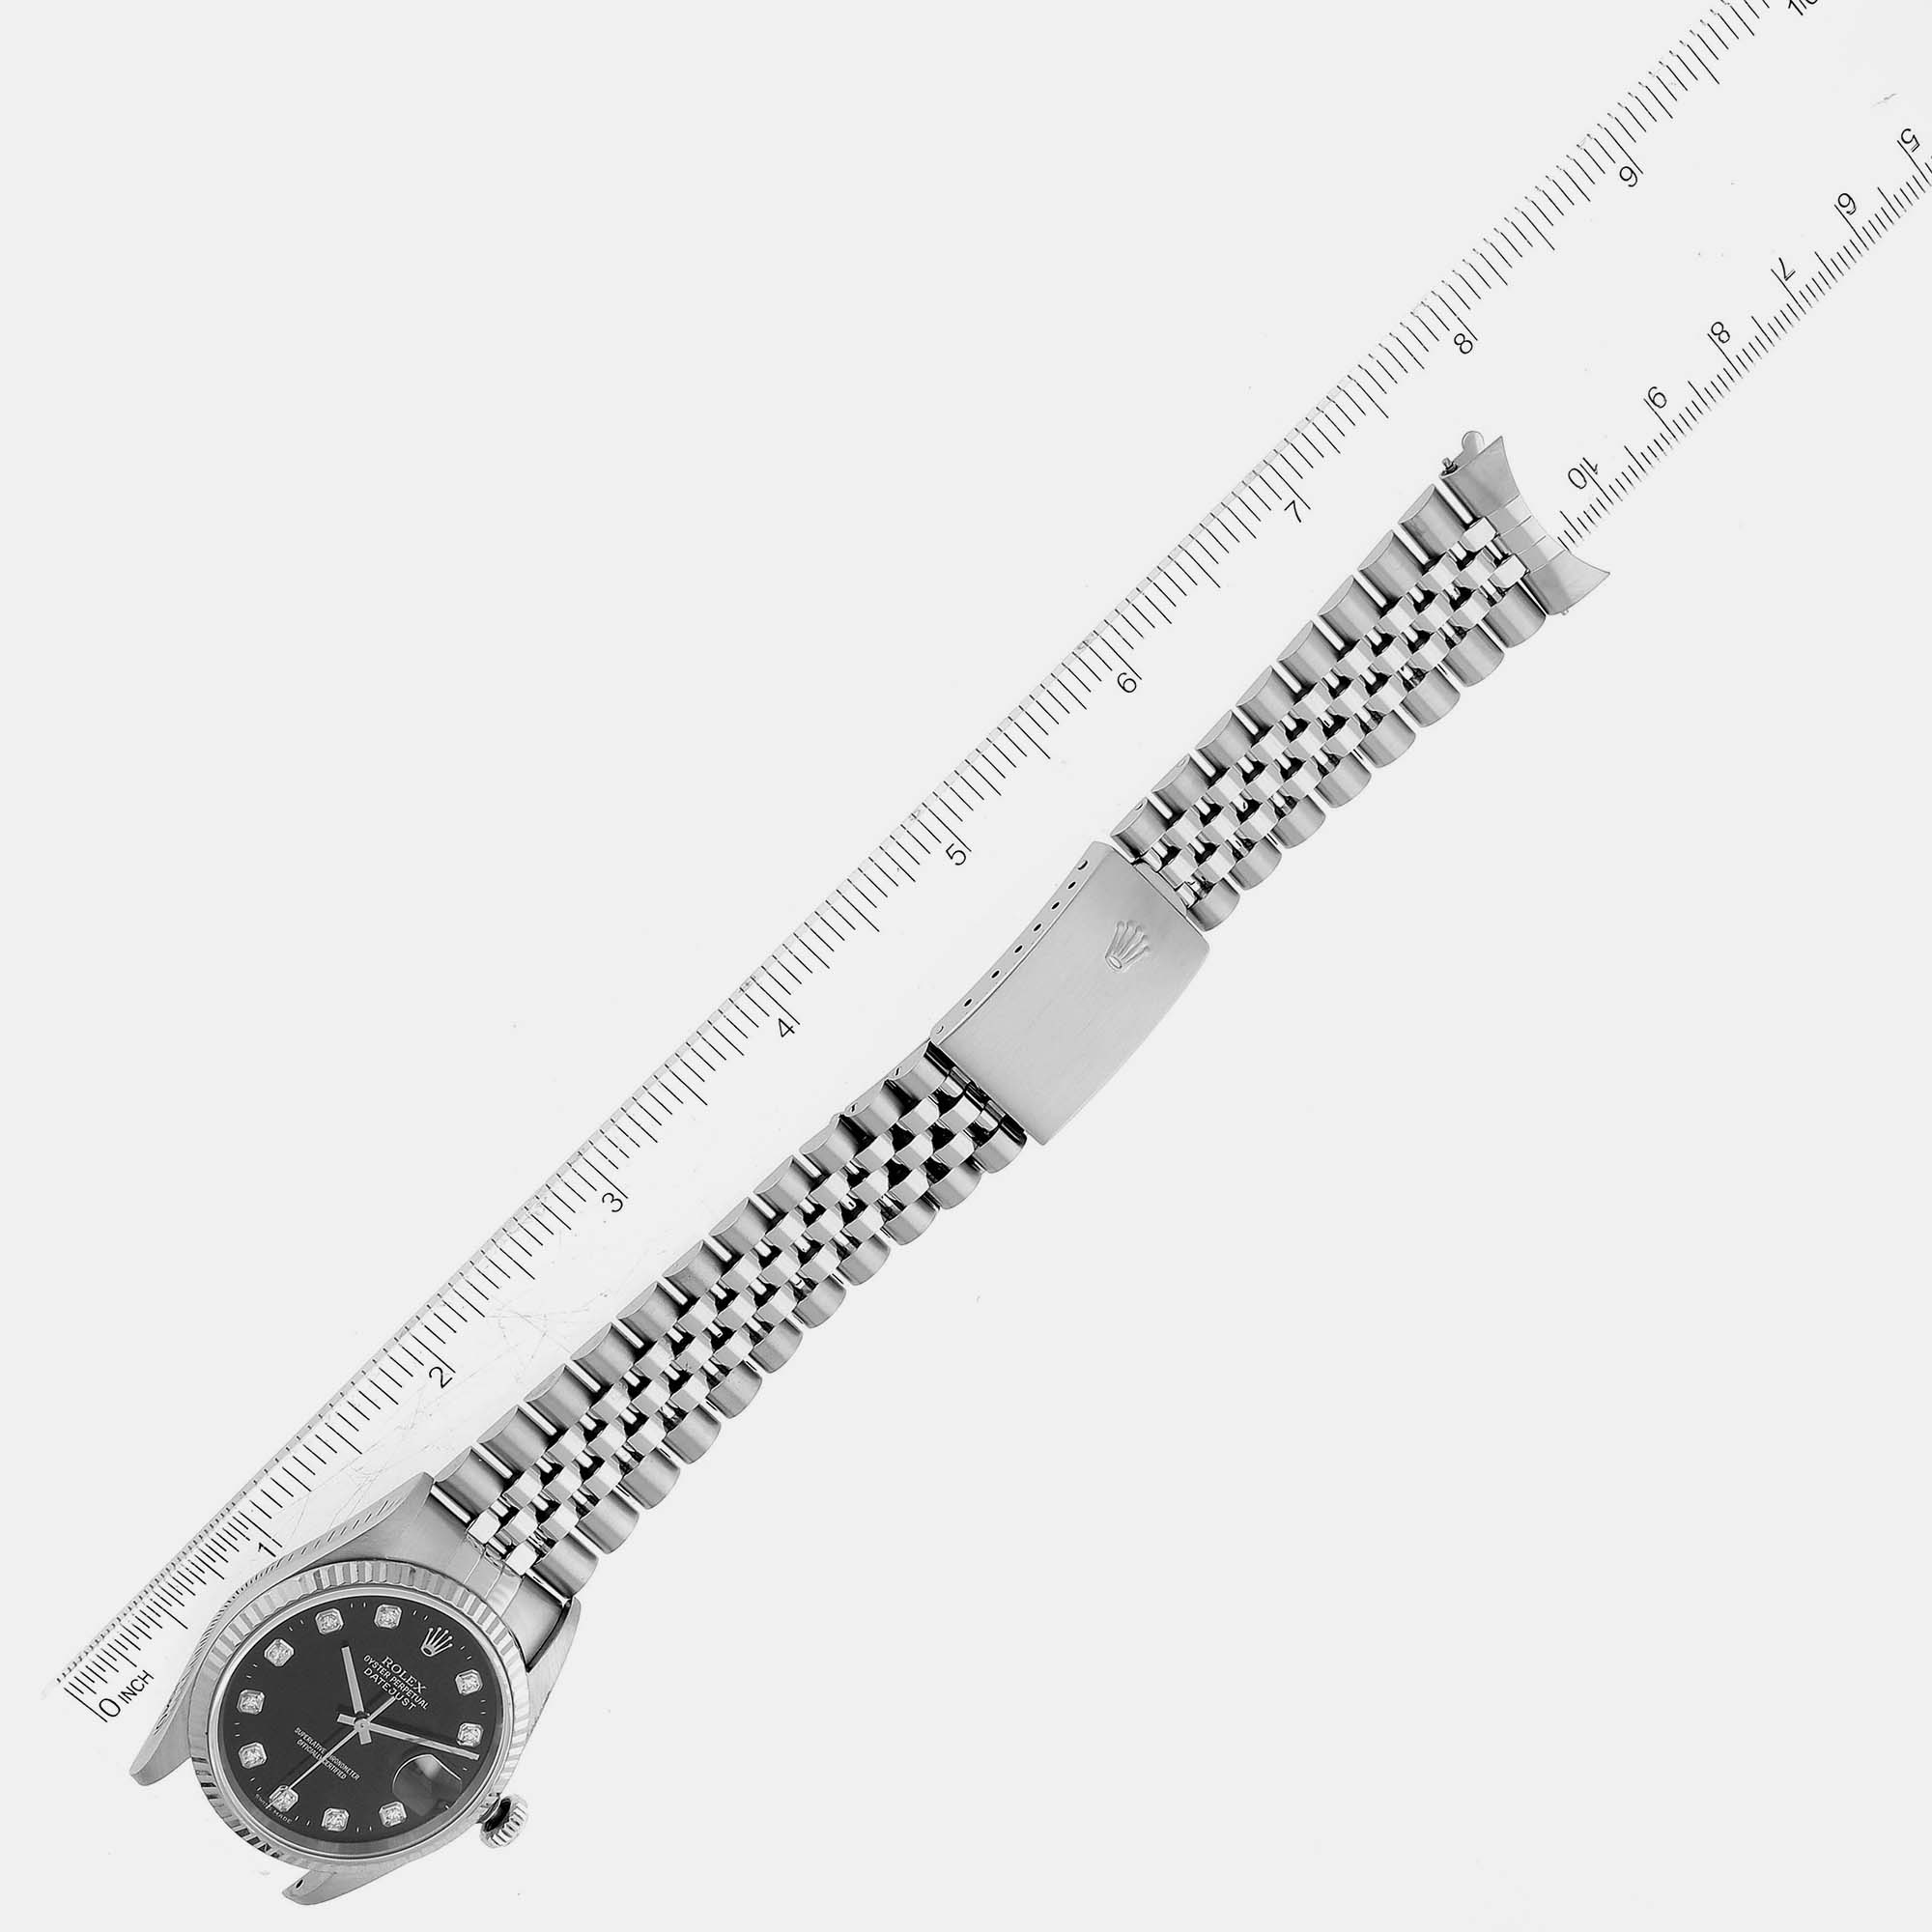 Rolex Datejust Steel White Gold Black Diamond Dial Men's Watch 16234 36 Mm